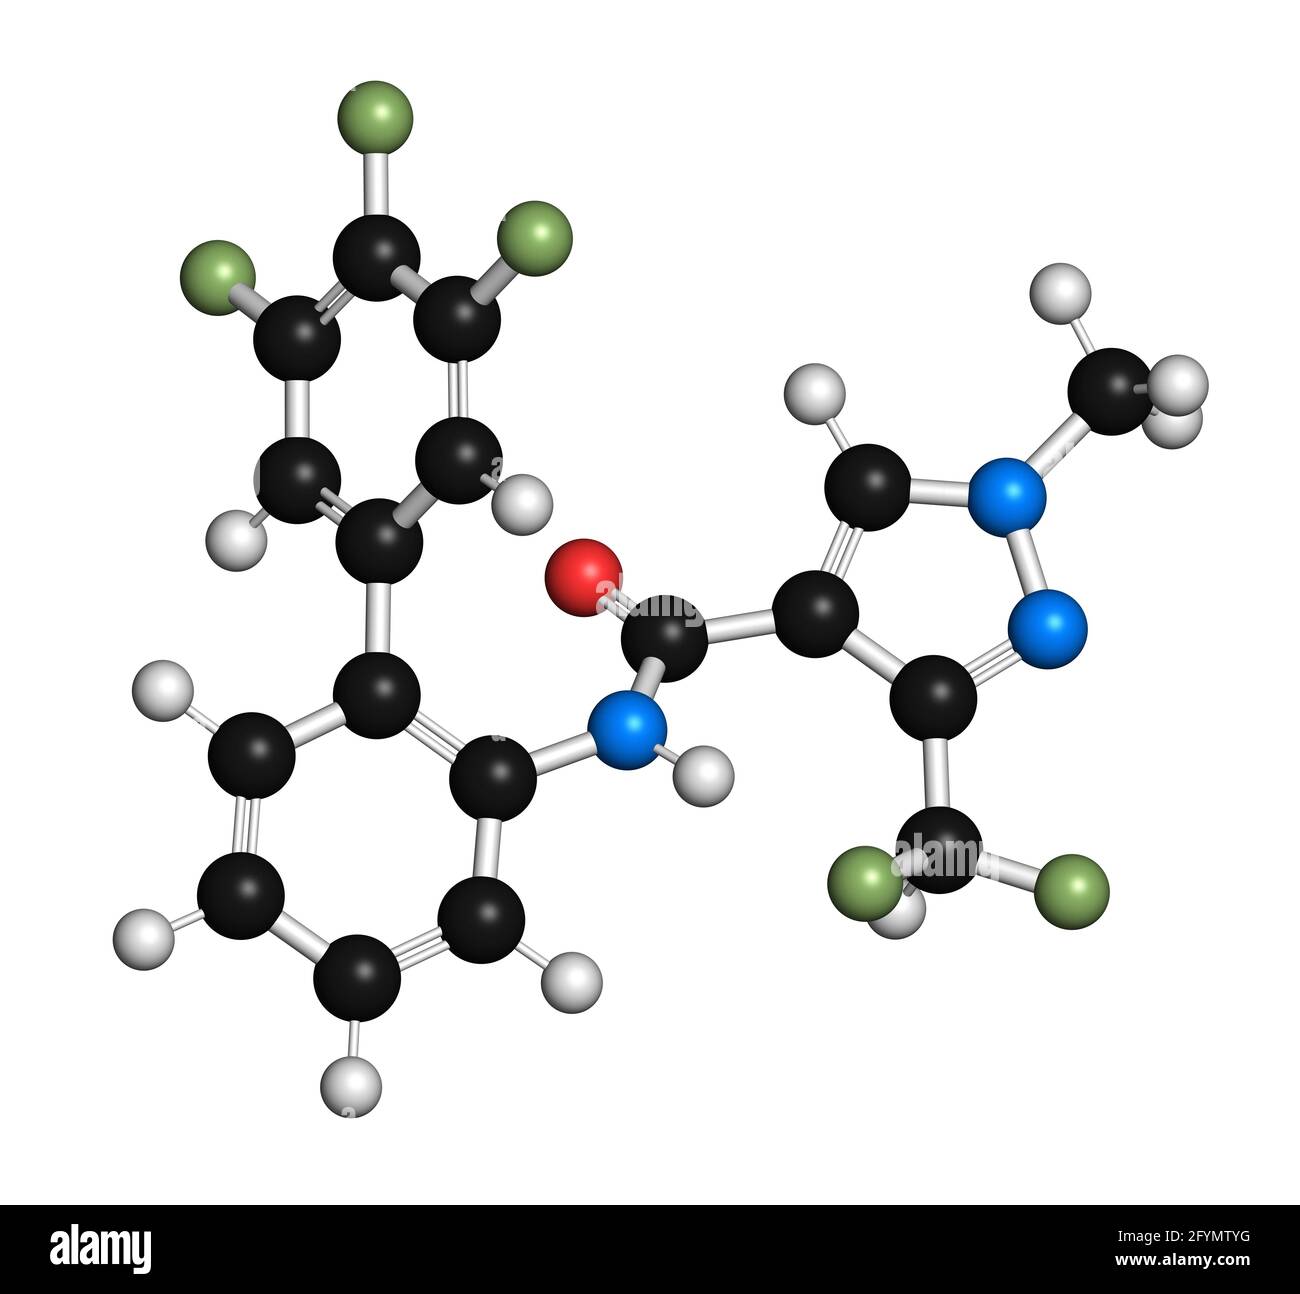 Fluxapyroxad fungicide molecule, illustration Stock Photo